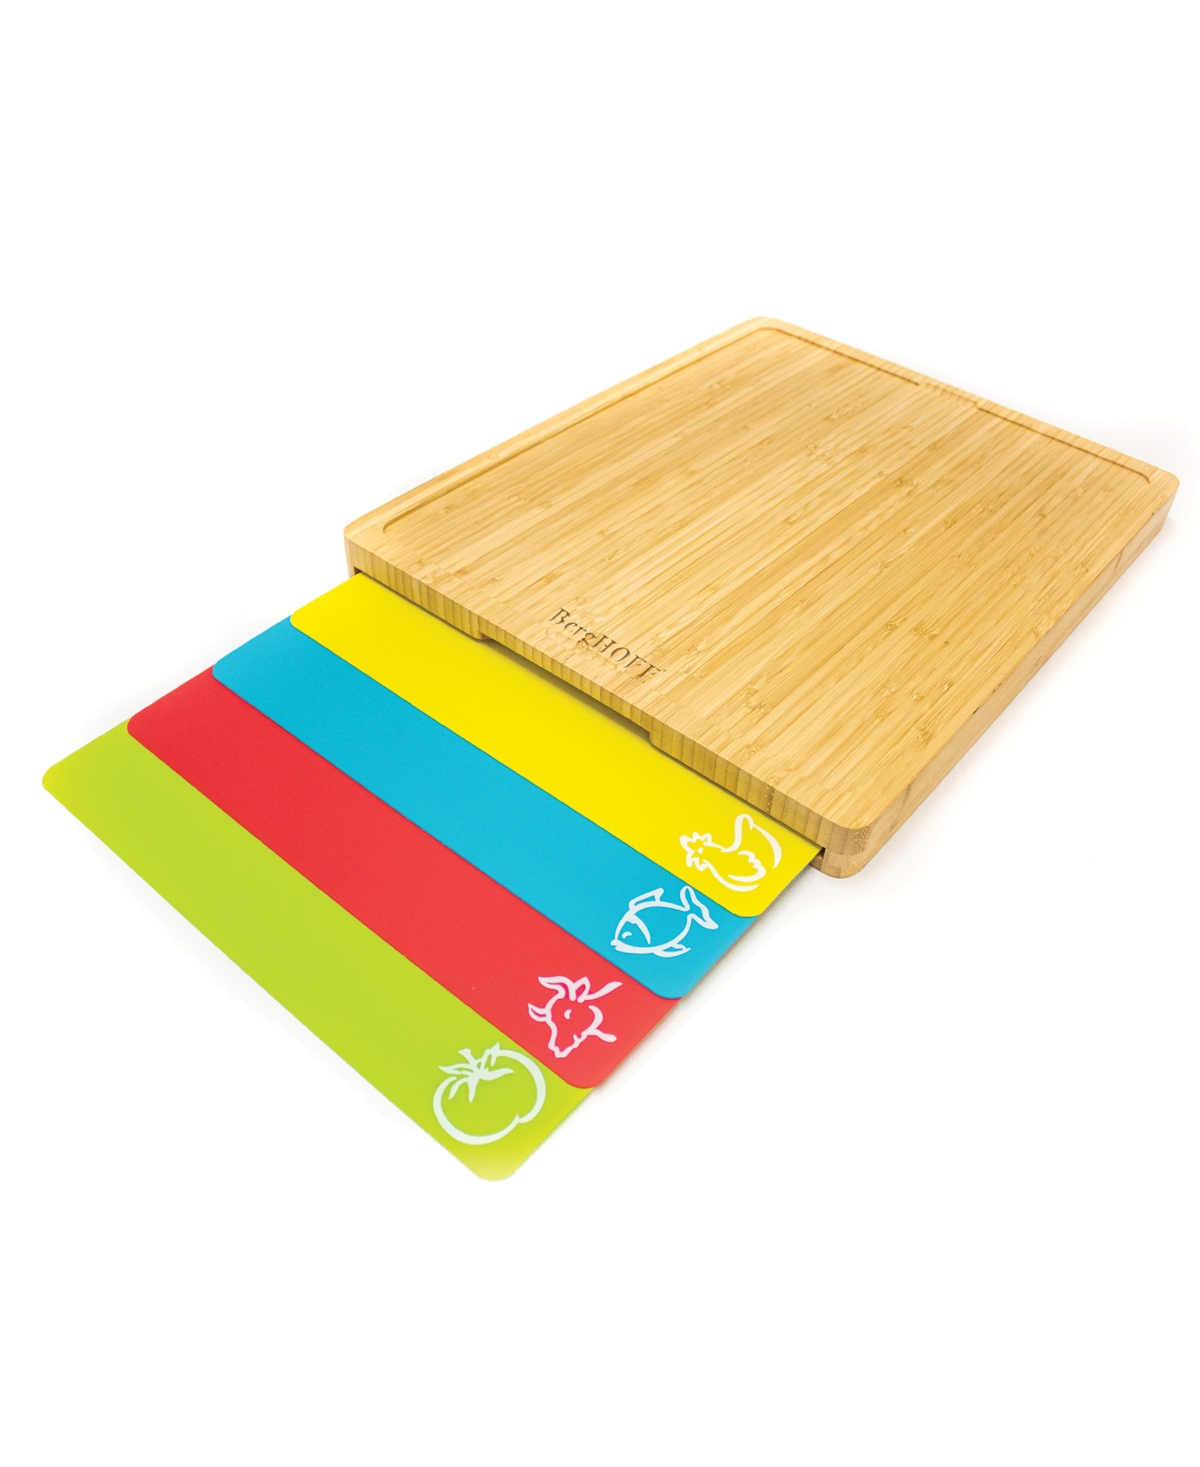 12113850 Bamboo Cutting Board and 4 Multi-Colored Inserts S sku 12113850